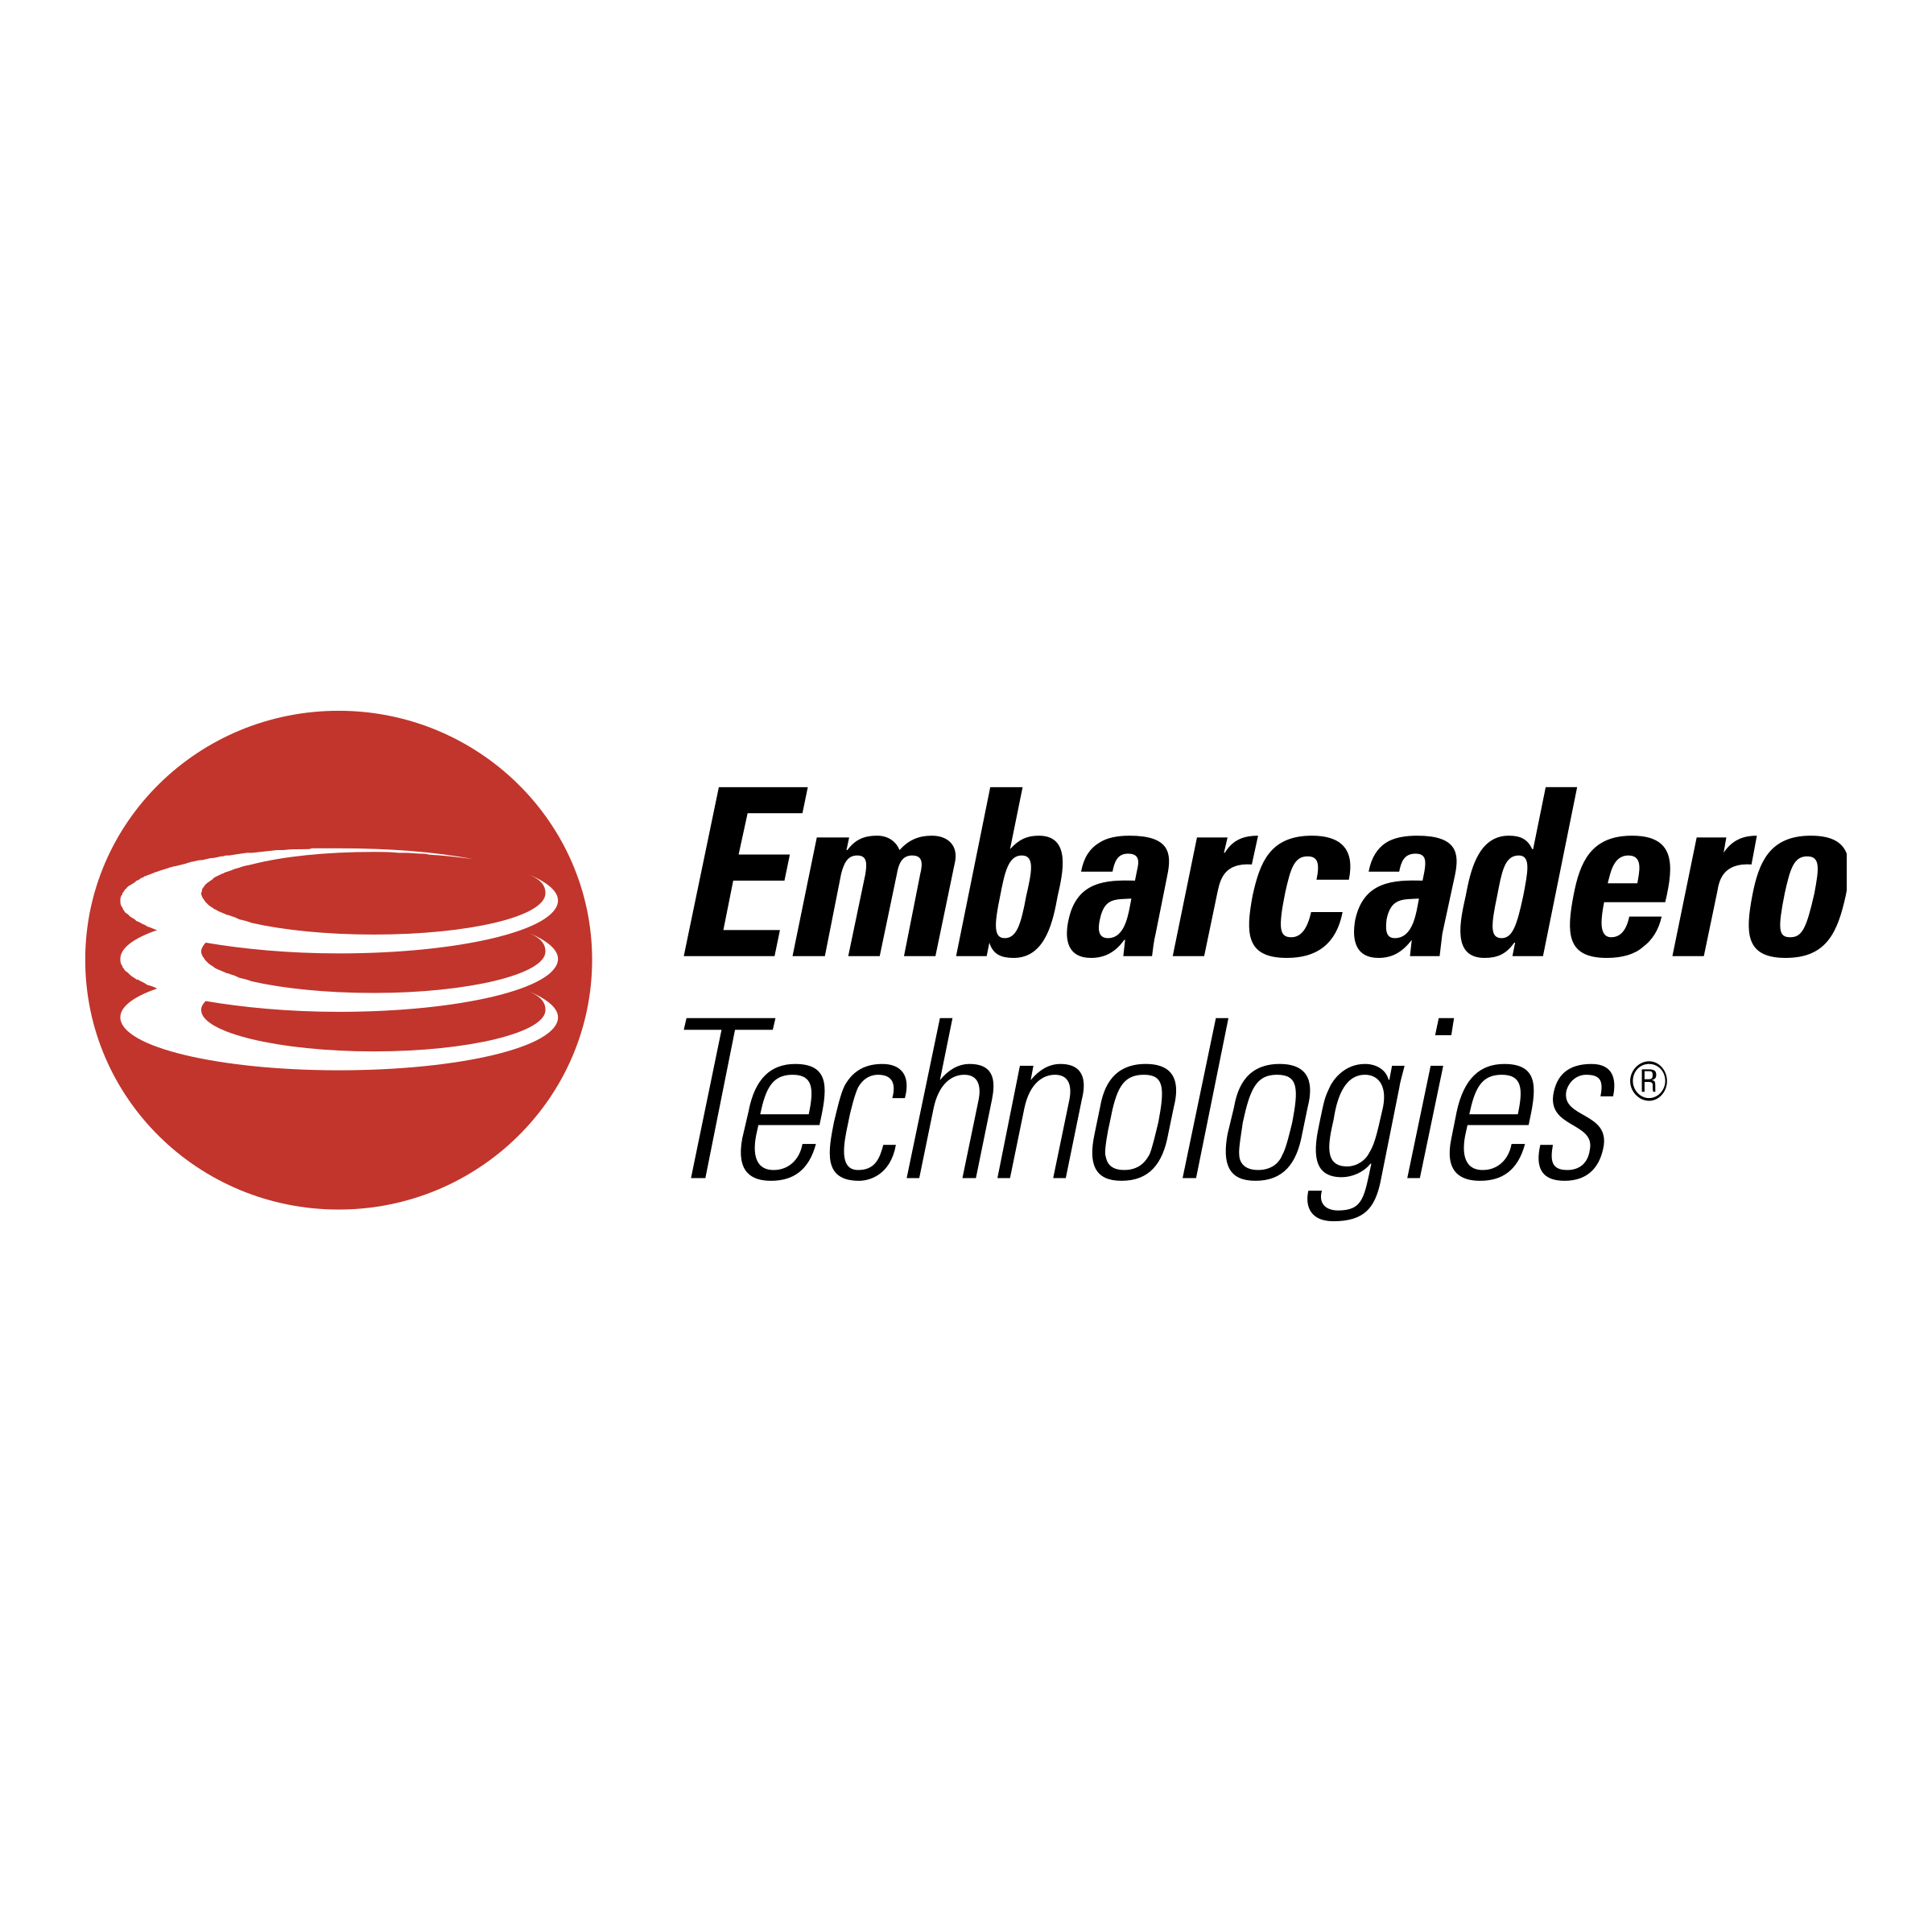 Embarcadero Logo - Embarcadero Technologies Logo PNG Transparent & SVG Vector - Freebie ...